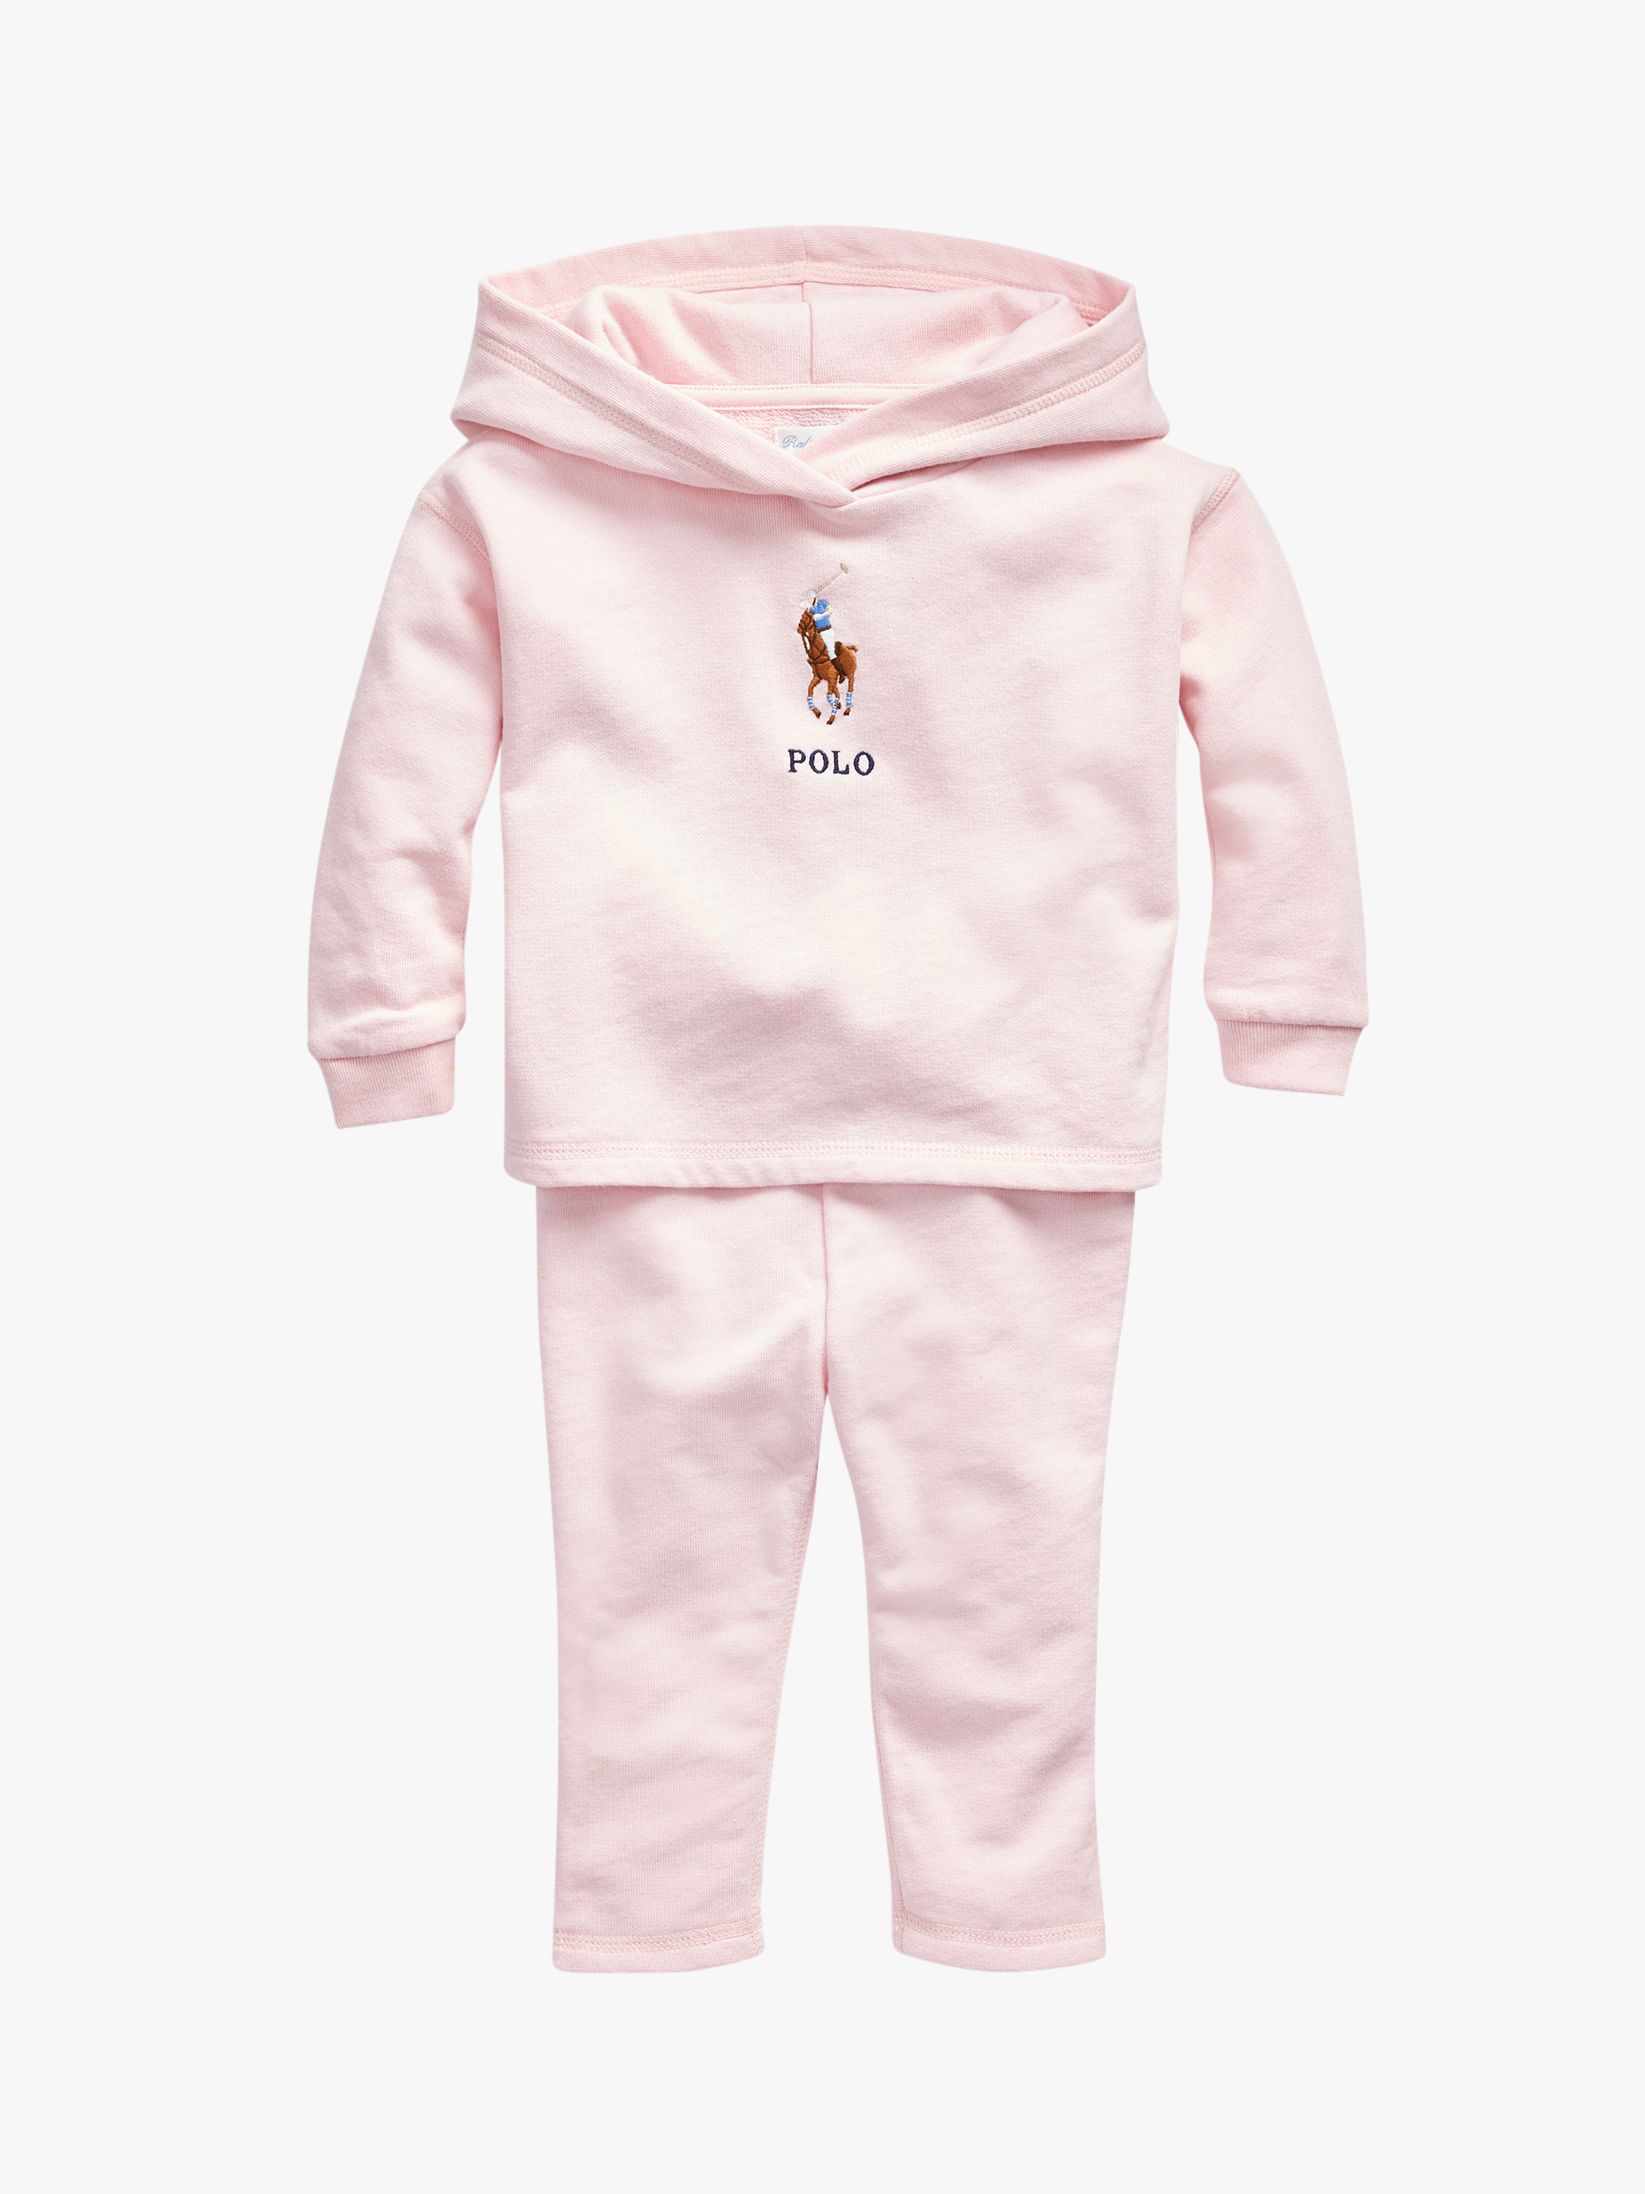 baby polo hoodies